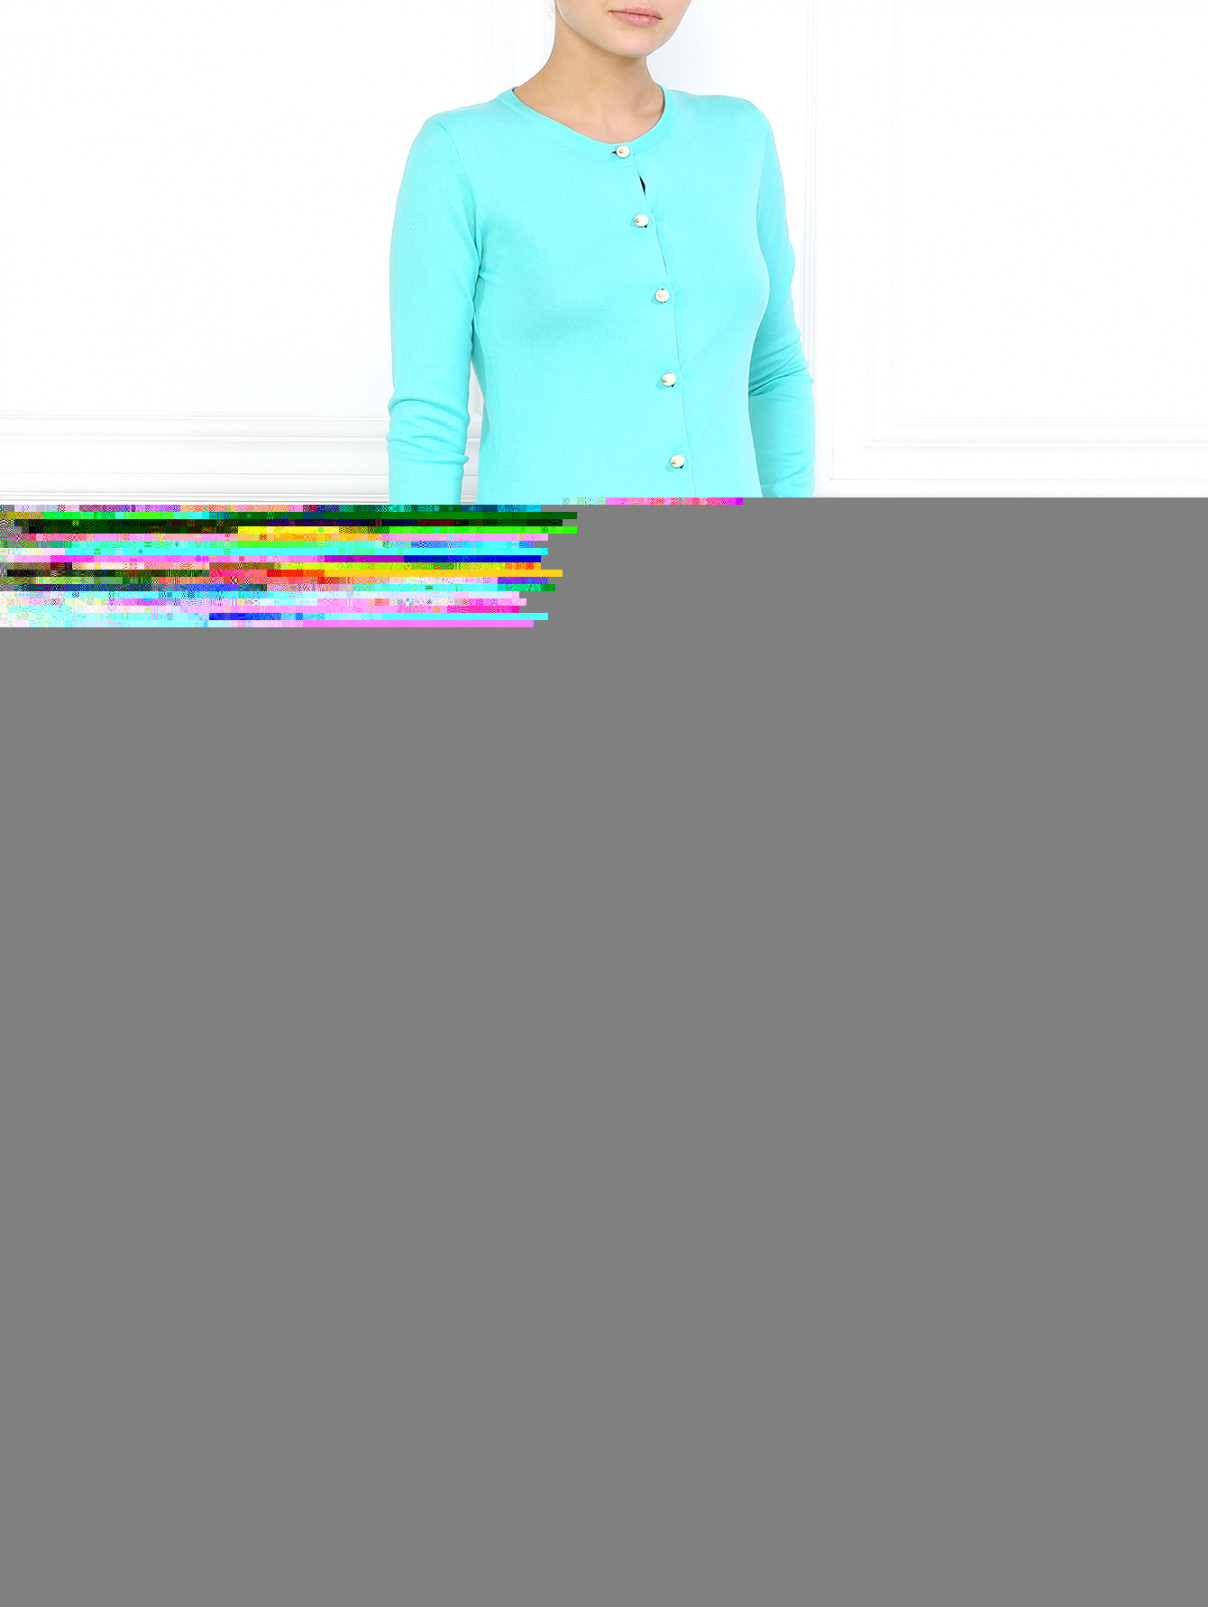 Кардиган с круглым вырезом Moschino Cheap&Chic  –  Модель Общий вид  – Цвет:  Синий